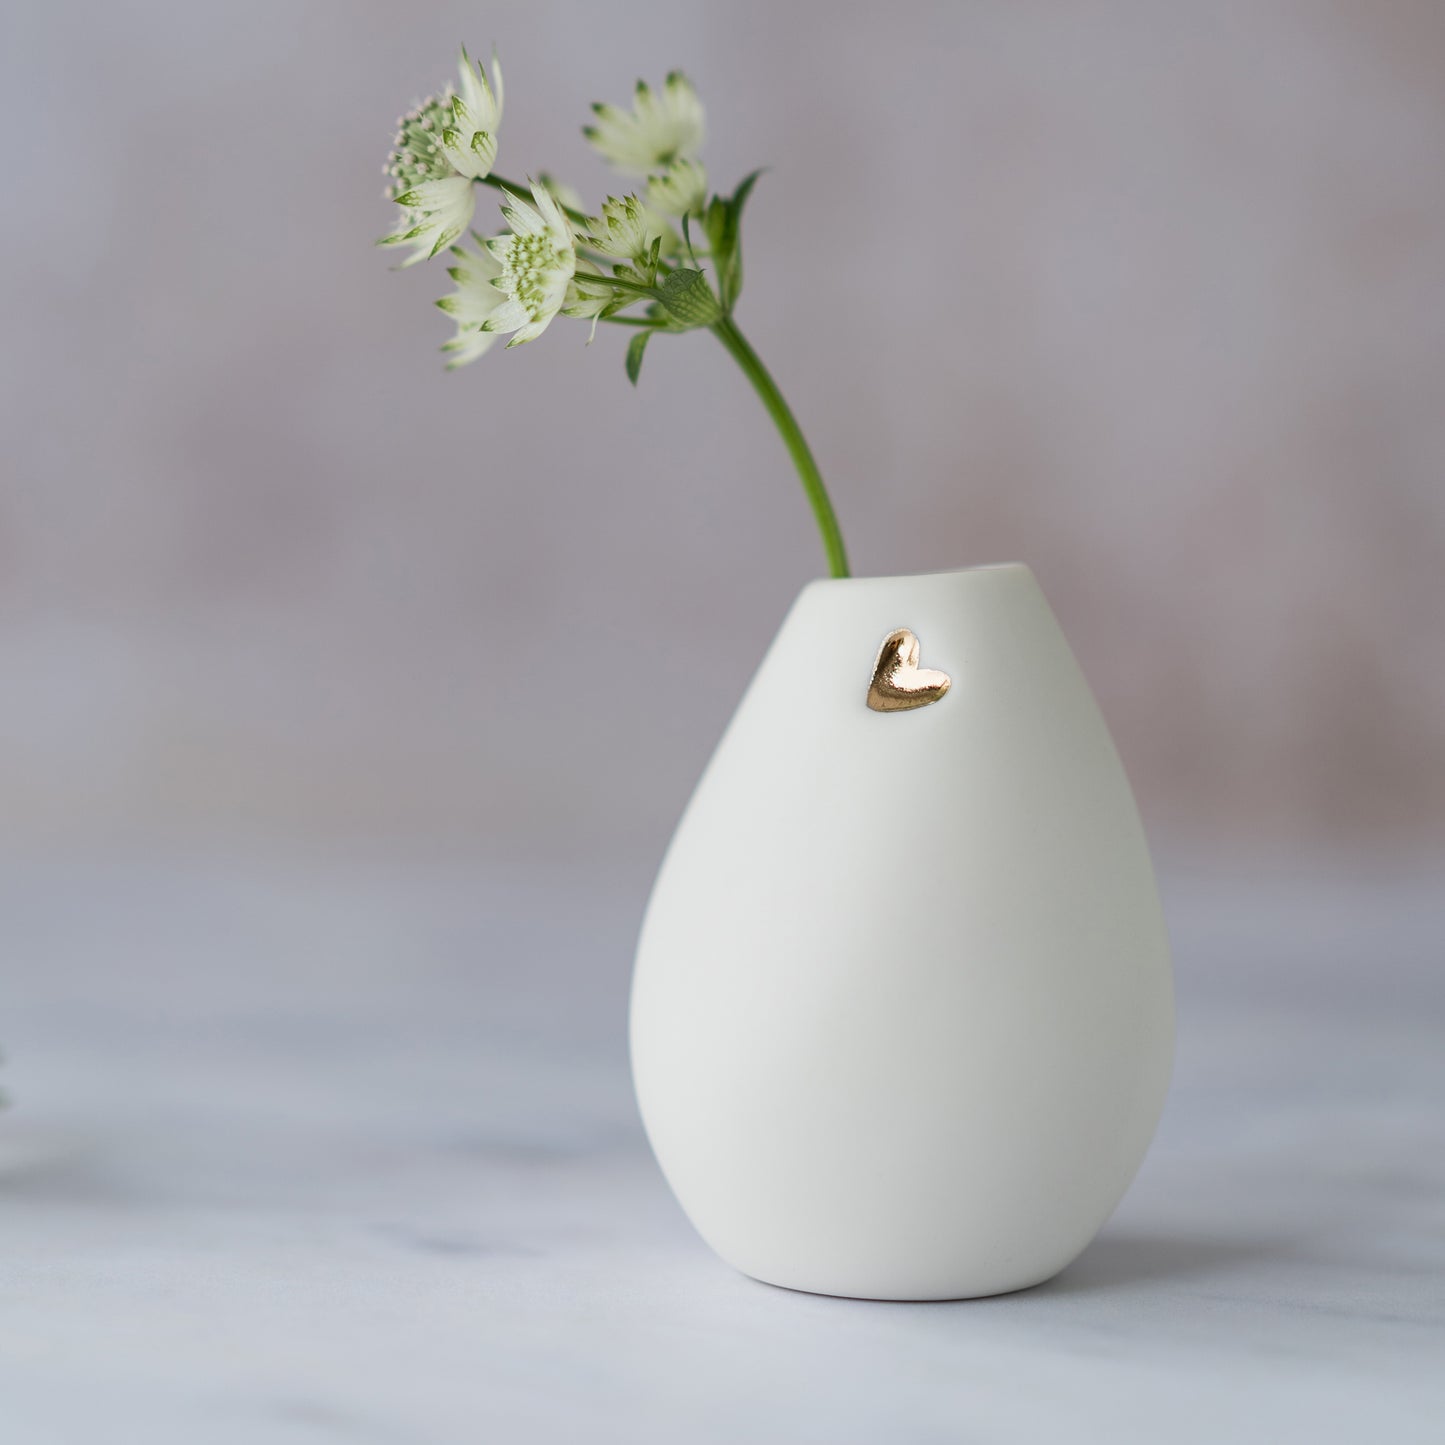 Small White Bud Vase with an embossed gold heart | Porcelain | Flower Vase | Mother's Day Vase